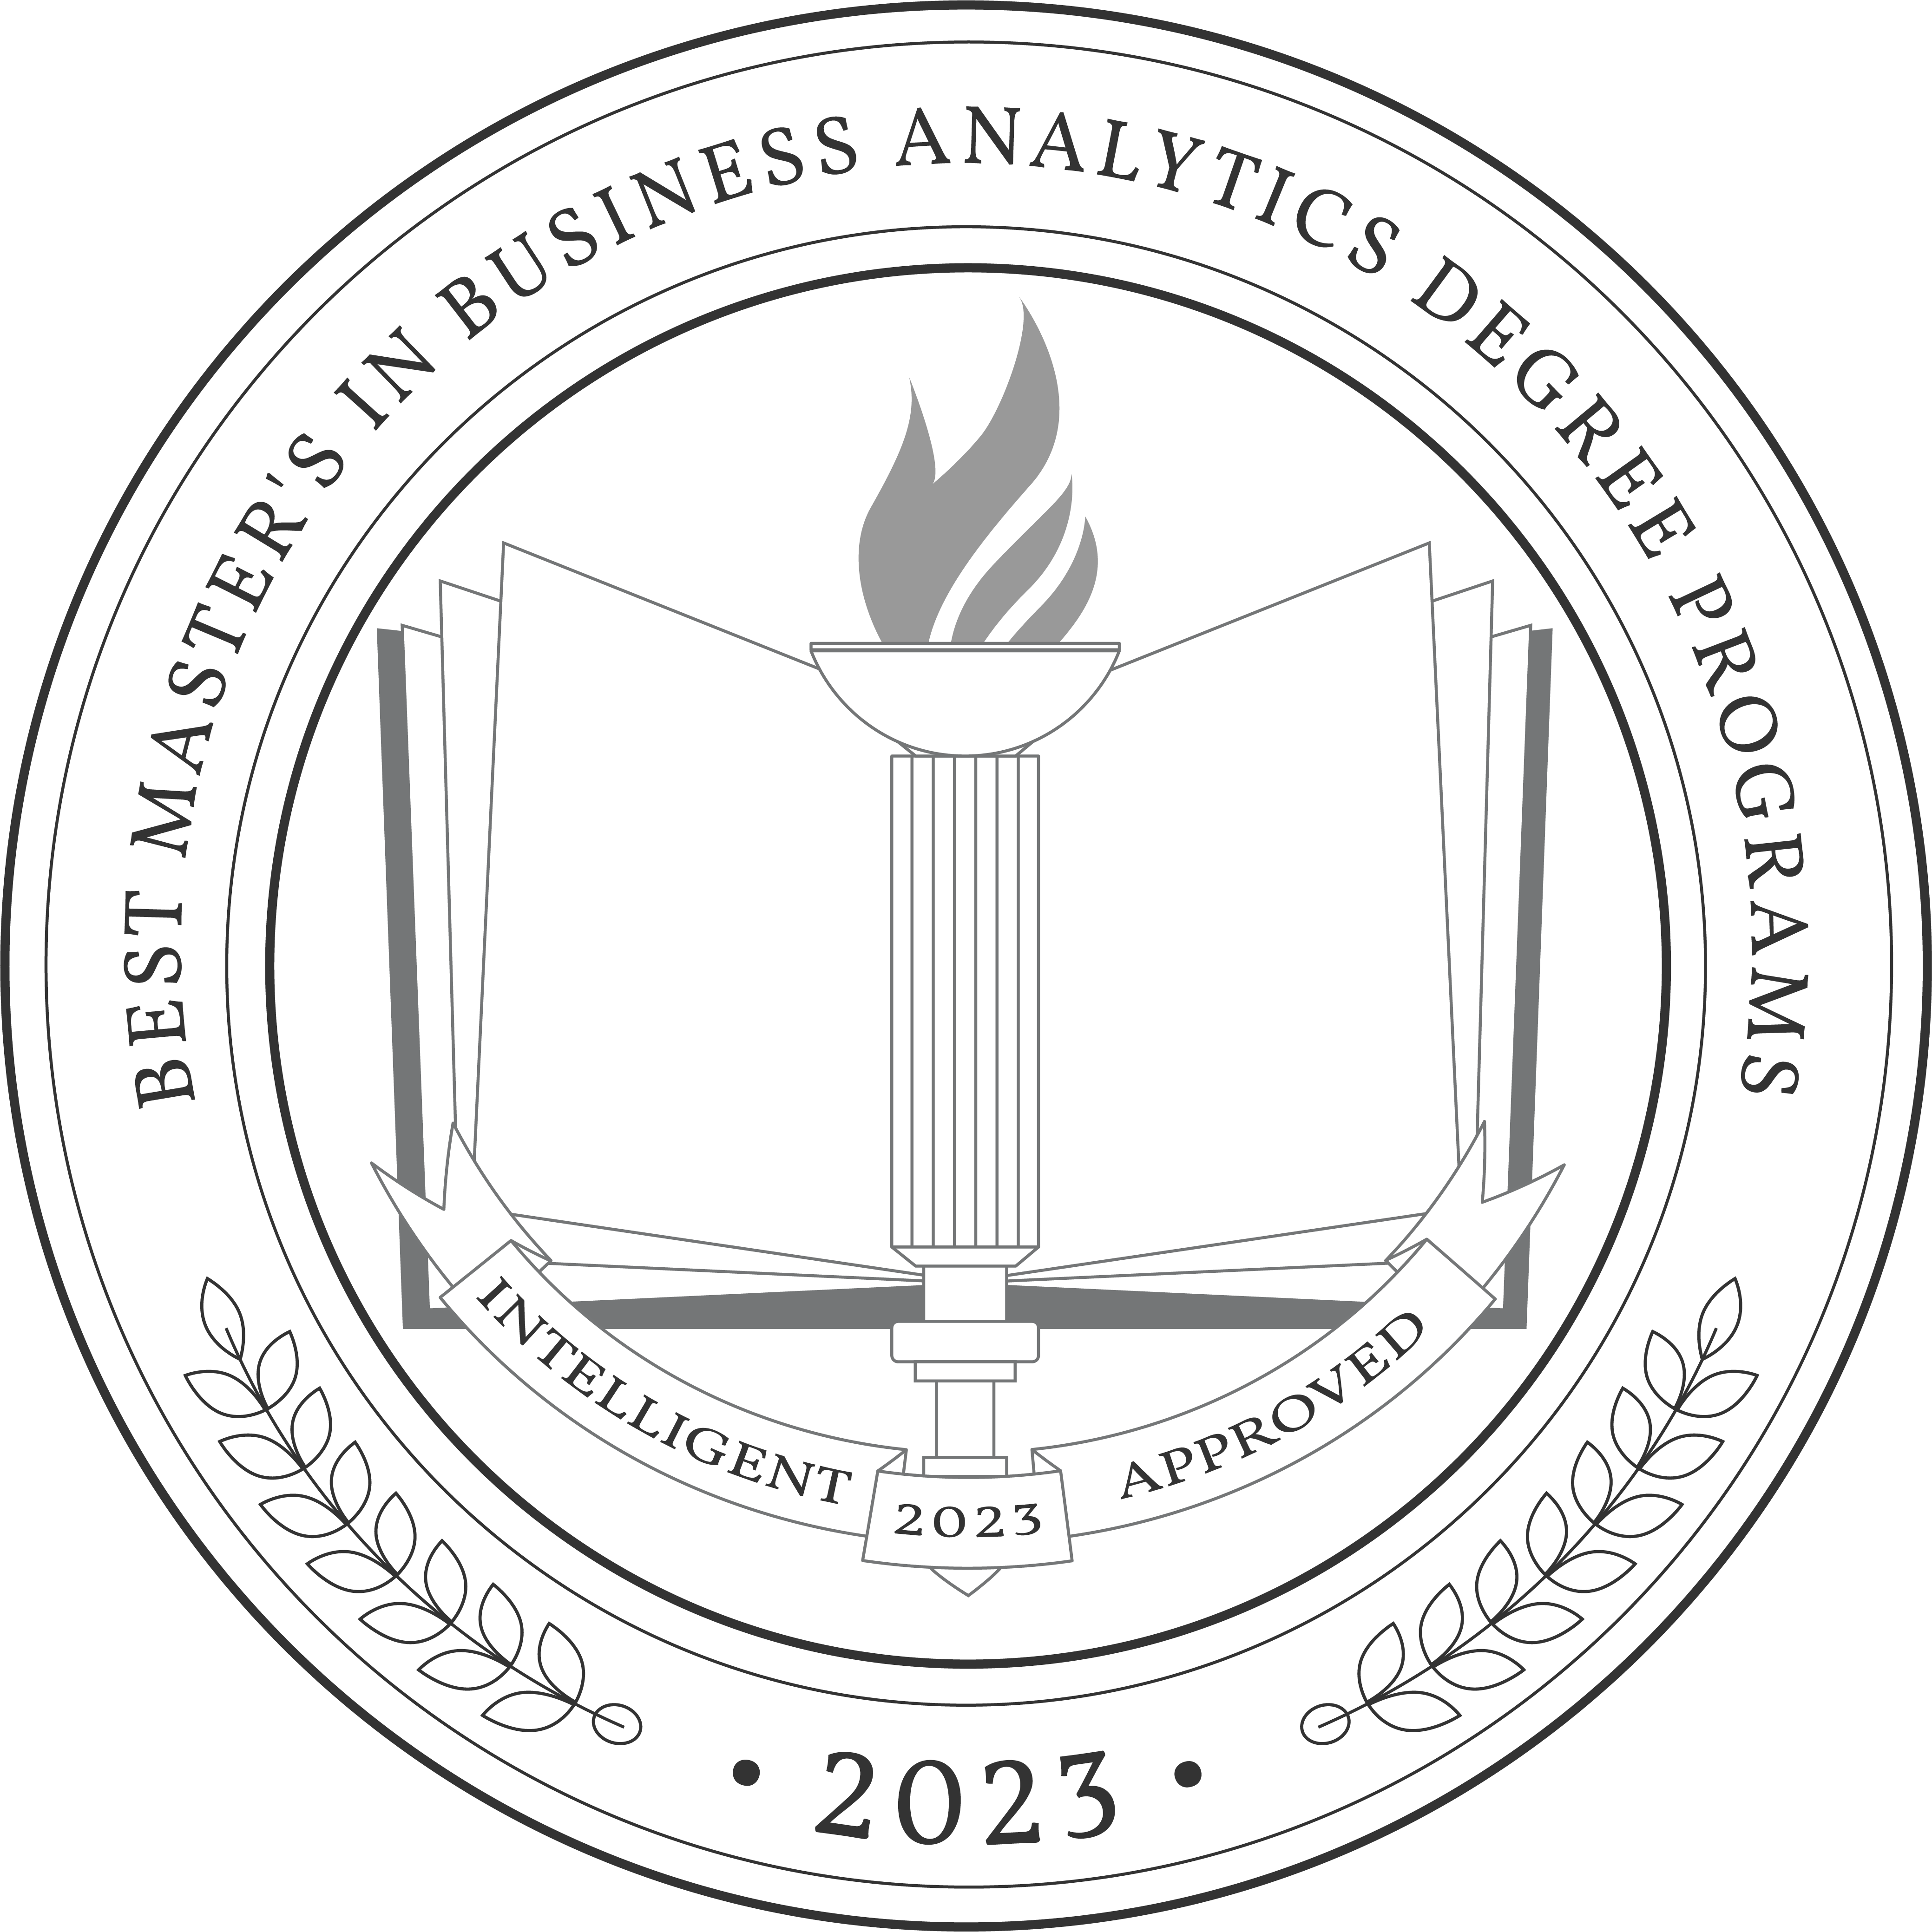 Online MS Business Analytics - School of Management - University at Buffalo